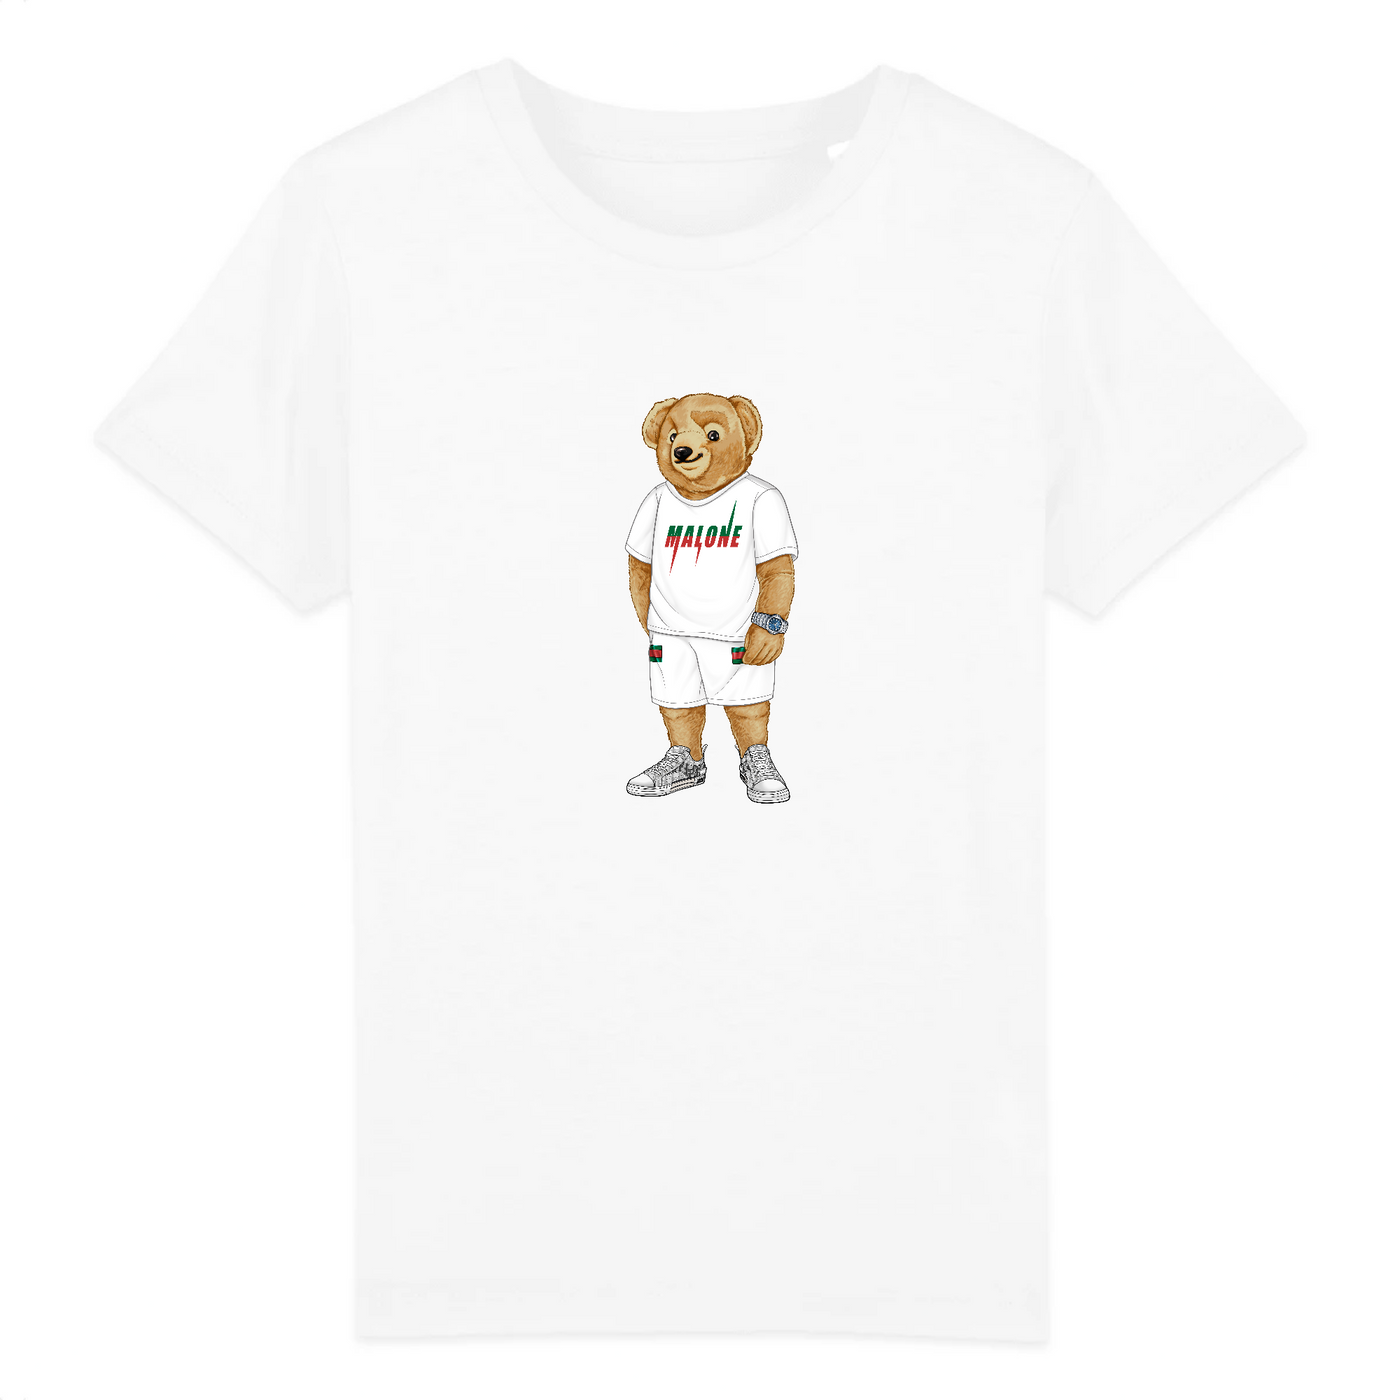 Kids | T-Shirt Trendy